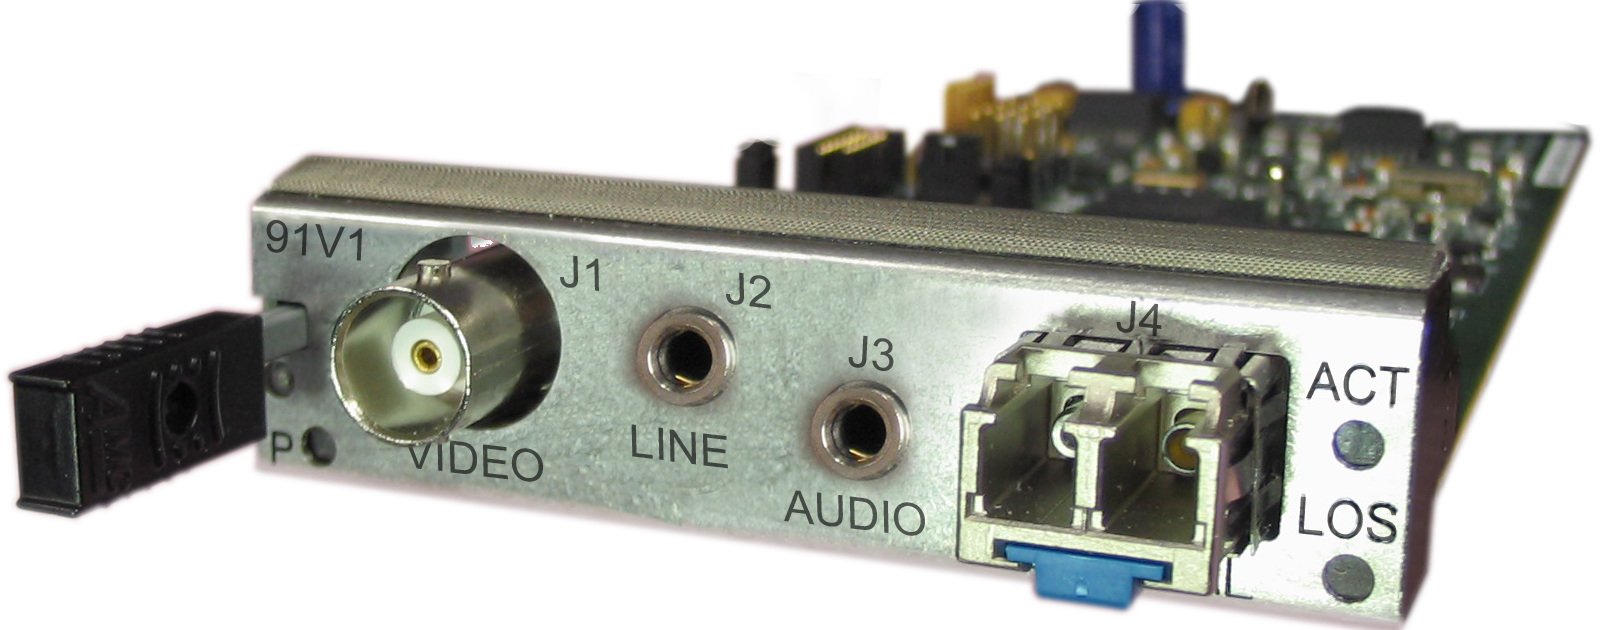 Model 9200-91V1 Fiber to Composite Video 